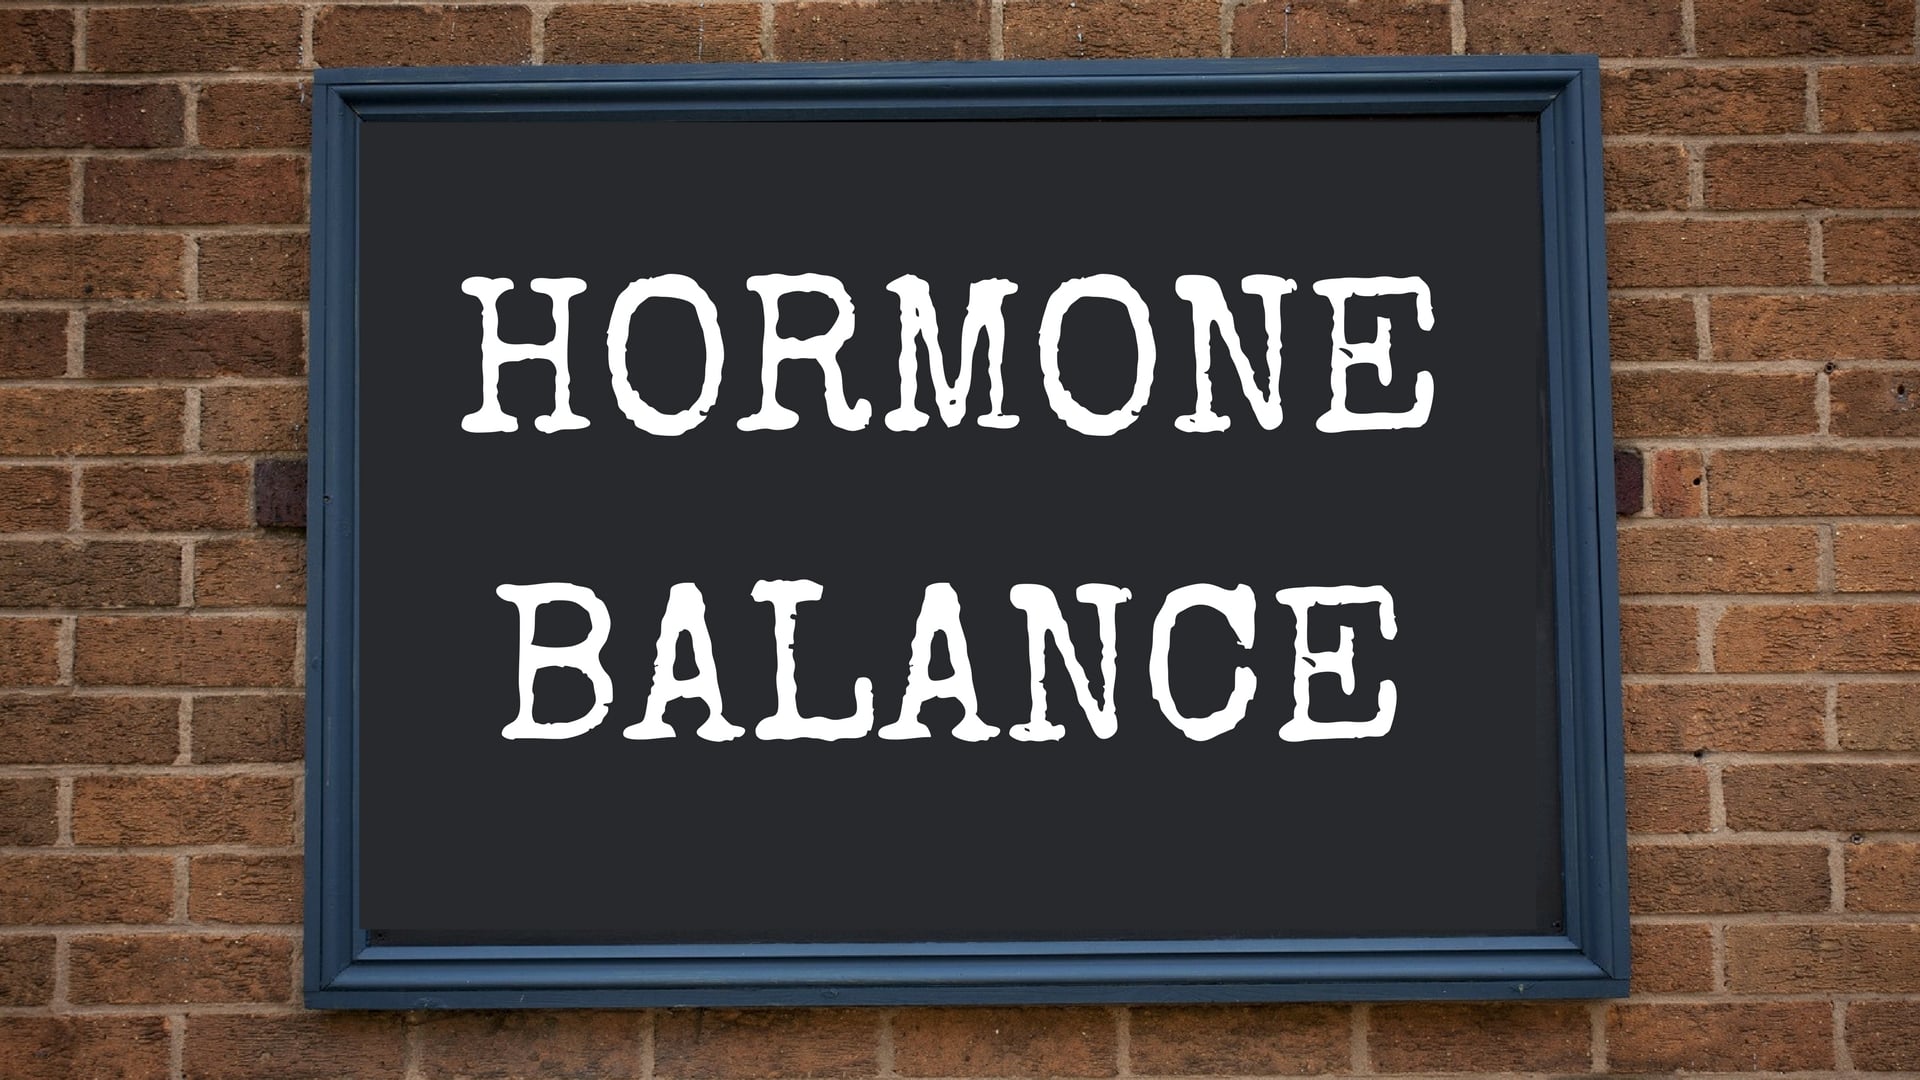 hormonal balance